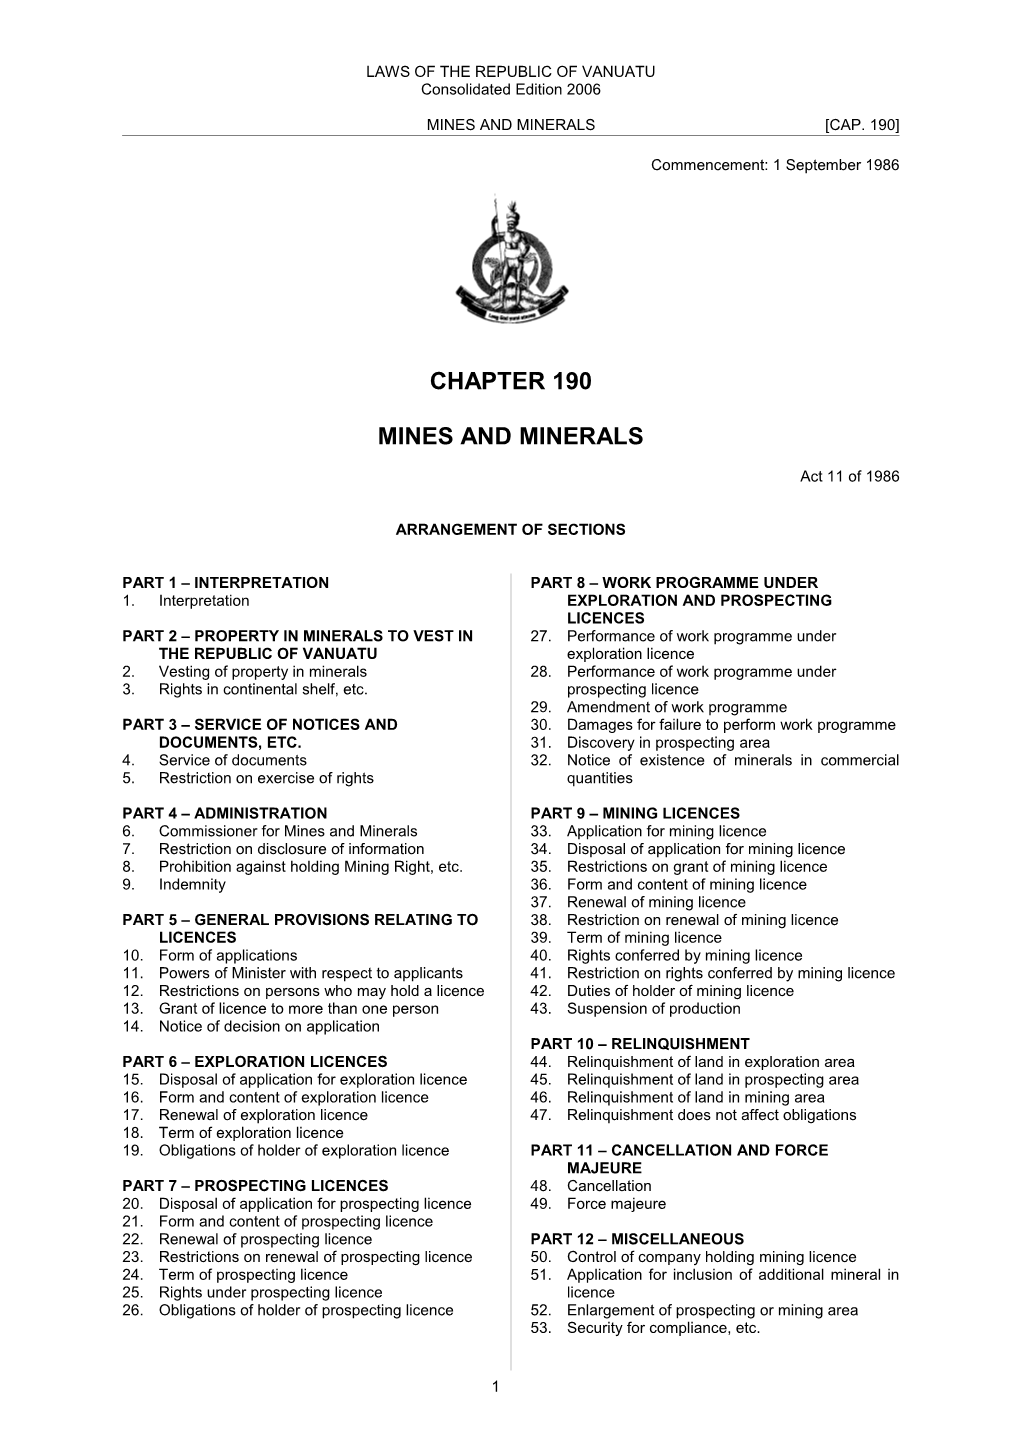 Laws of the Mpublic of Vawatu